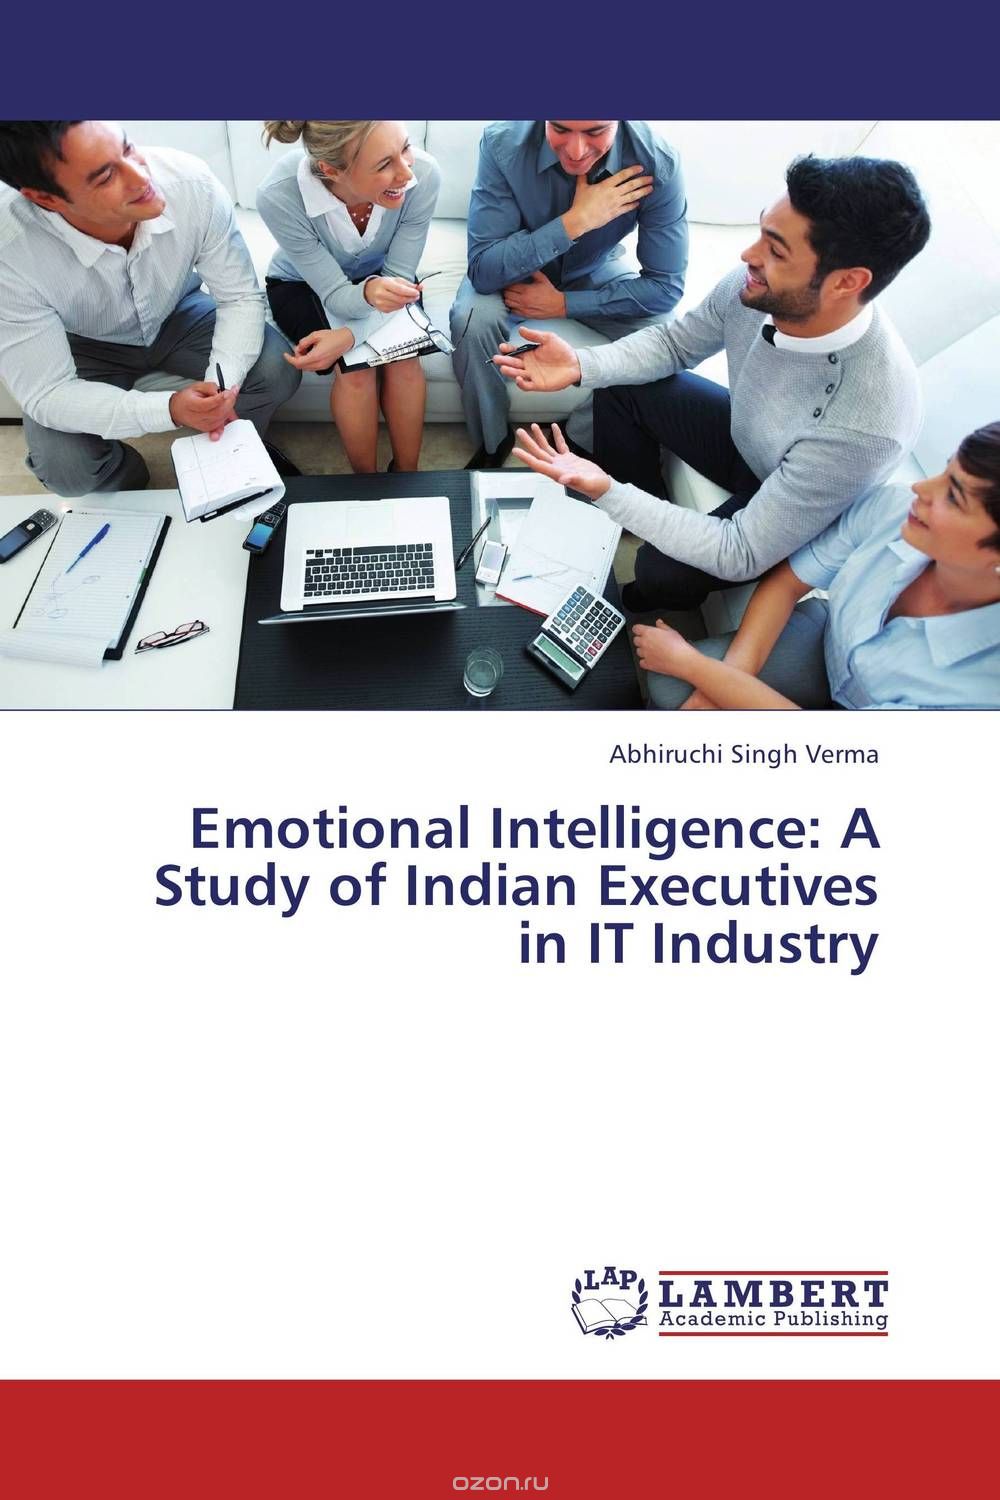 Скачать книгу "Emotional Intelligence: A Study of Indian Executives in IT Industry"